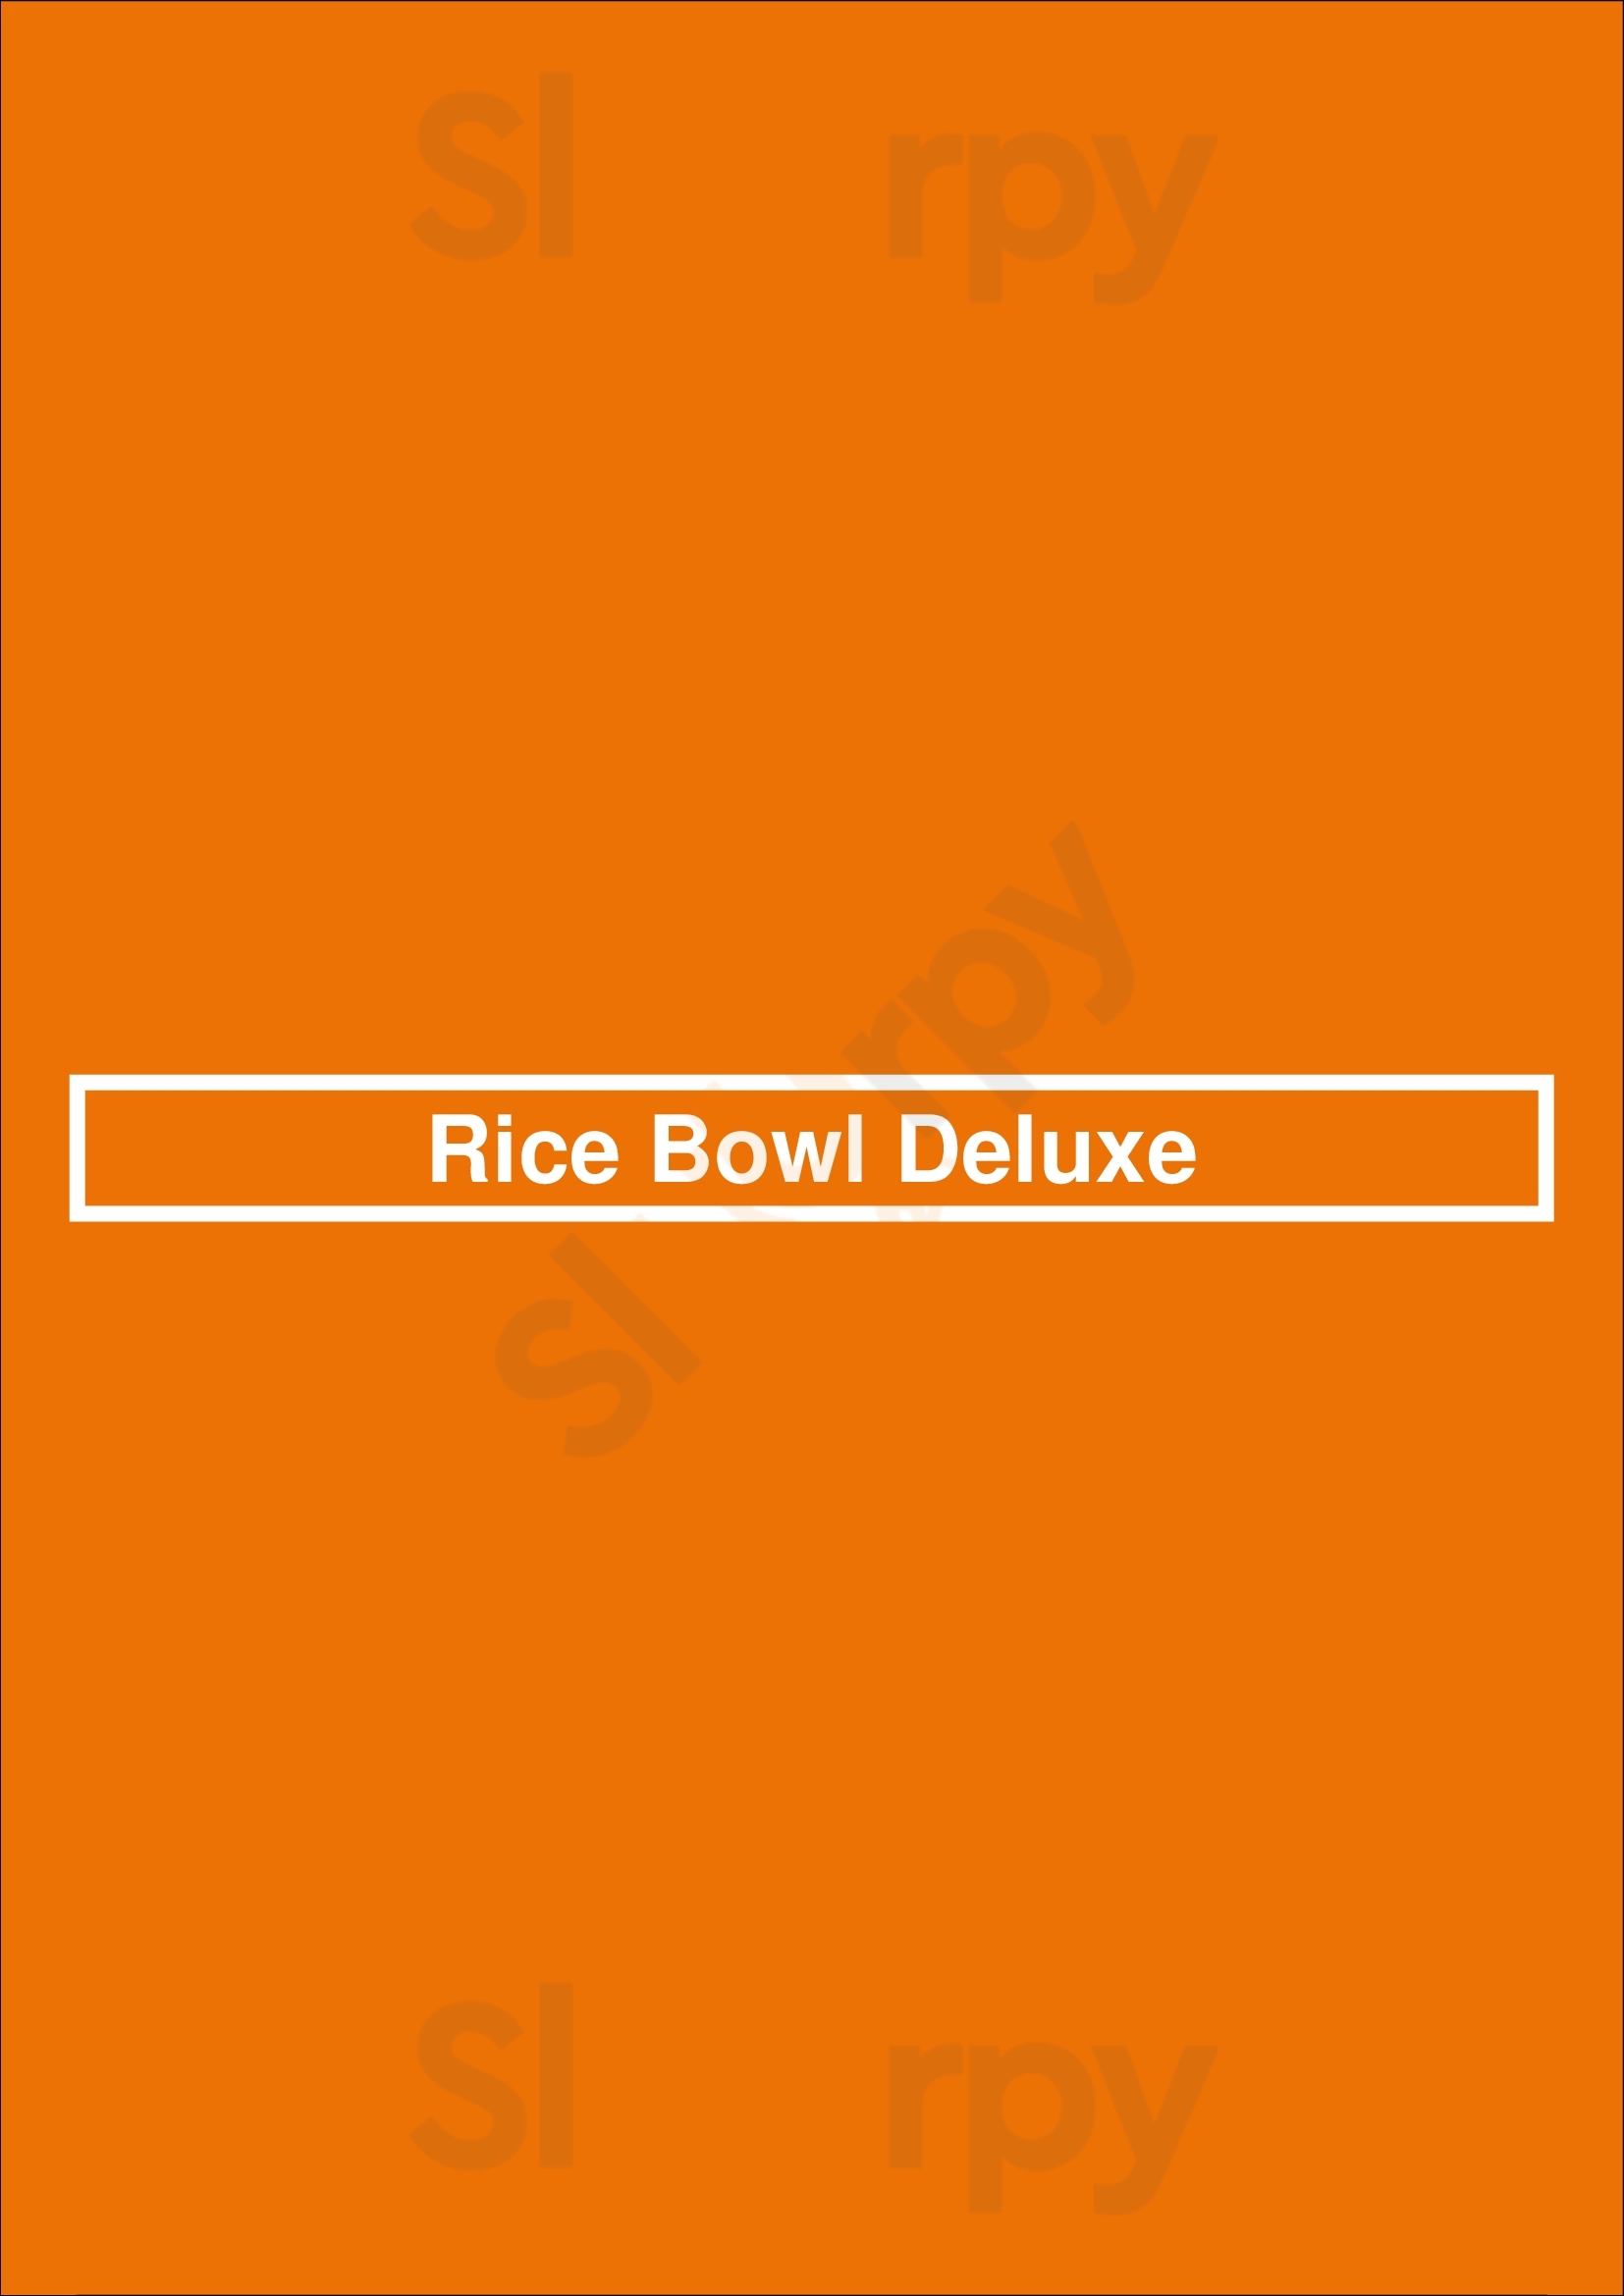 Rice Bowl Deluxe Edmonton Menu - 1